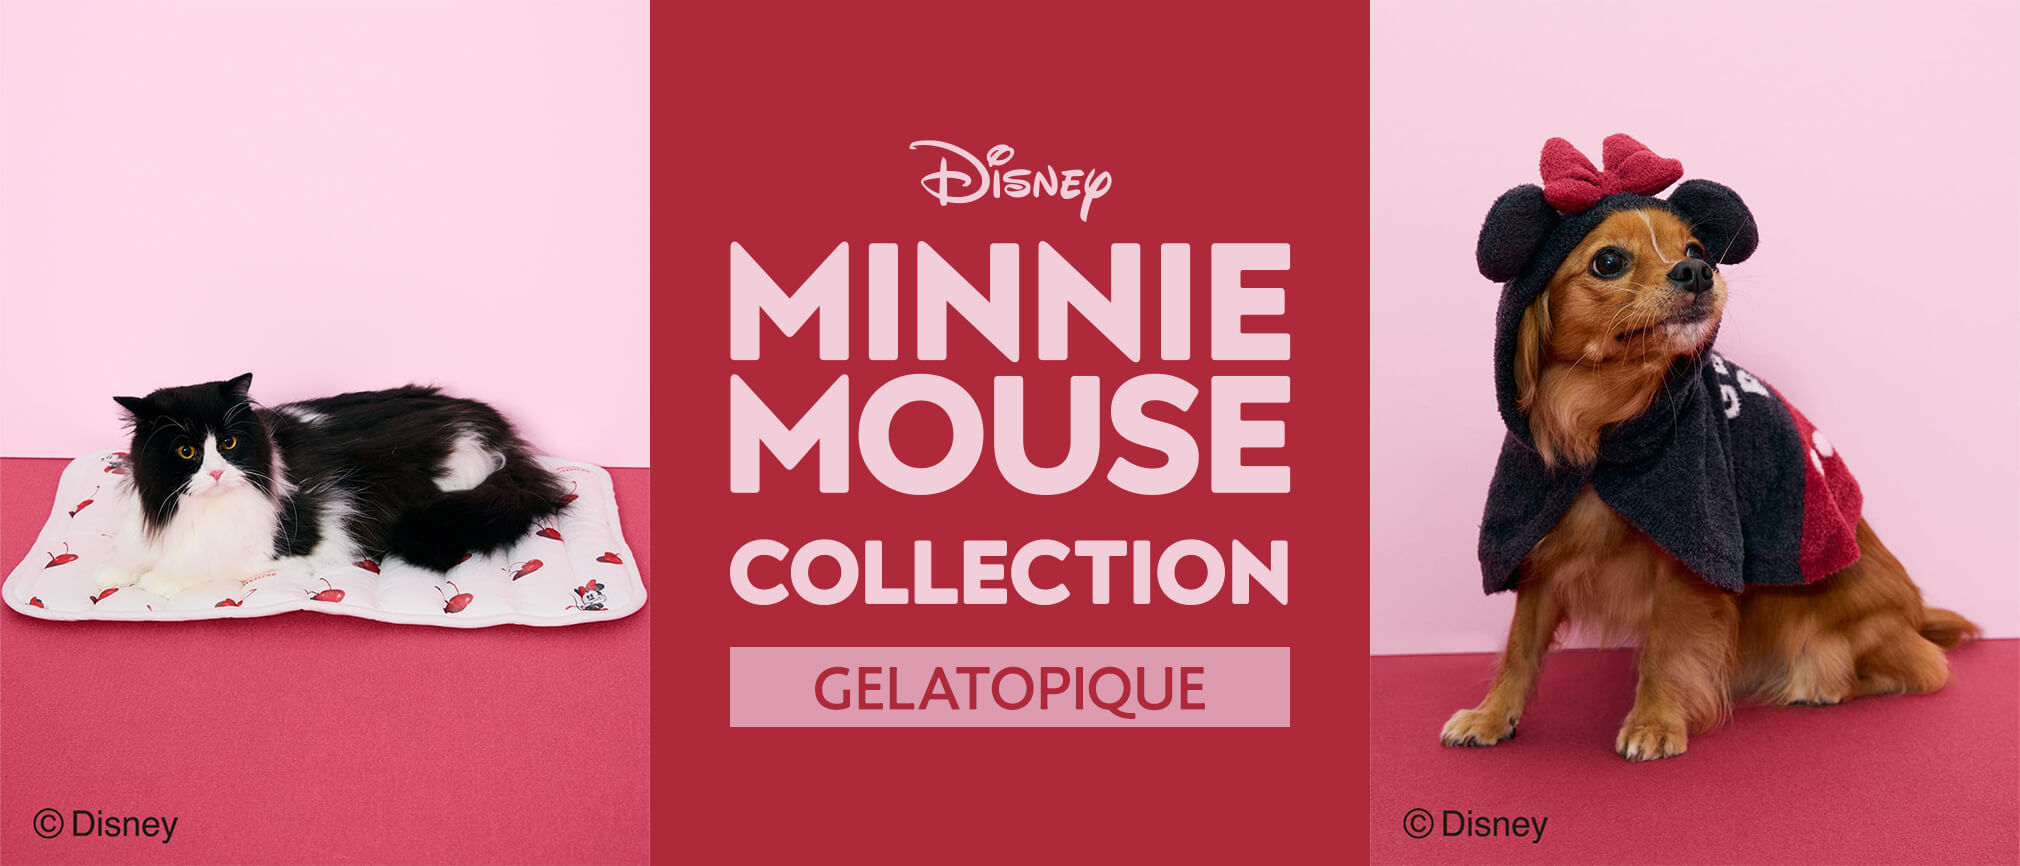 GELATO PIQUE&ミニーマウスのコラボコレクション